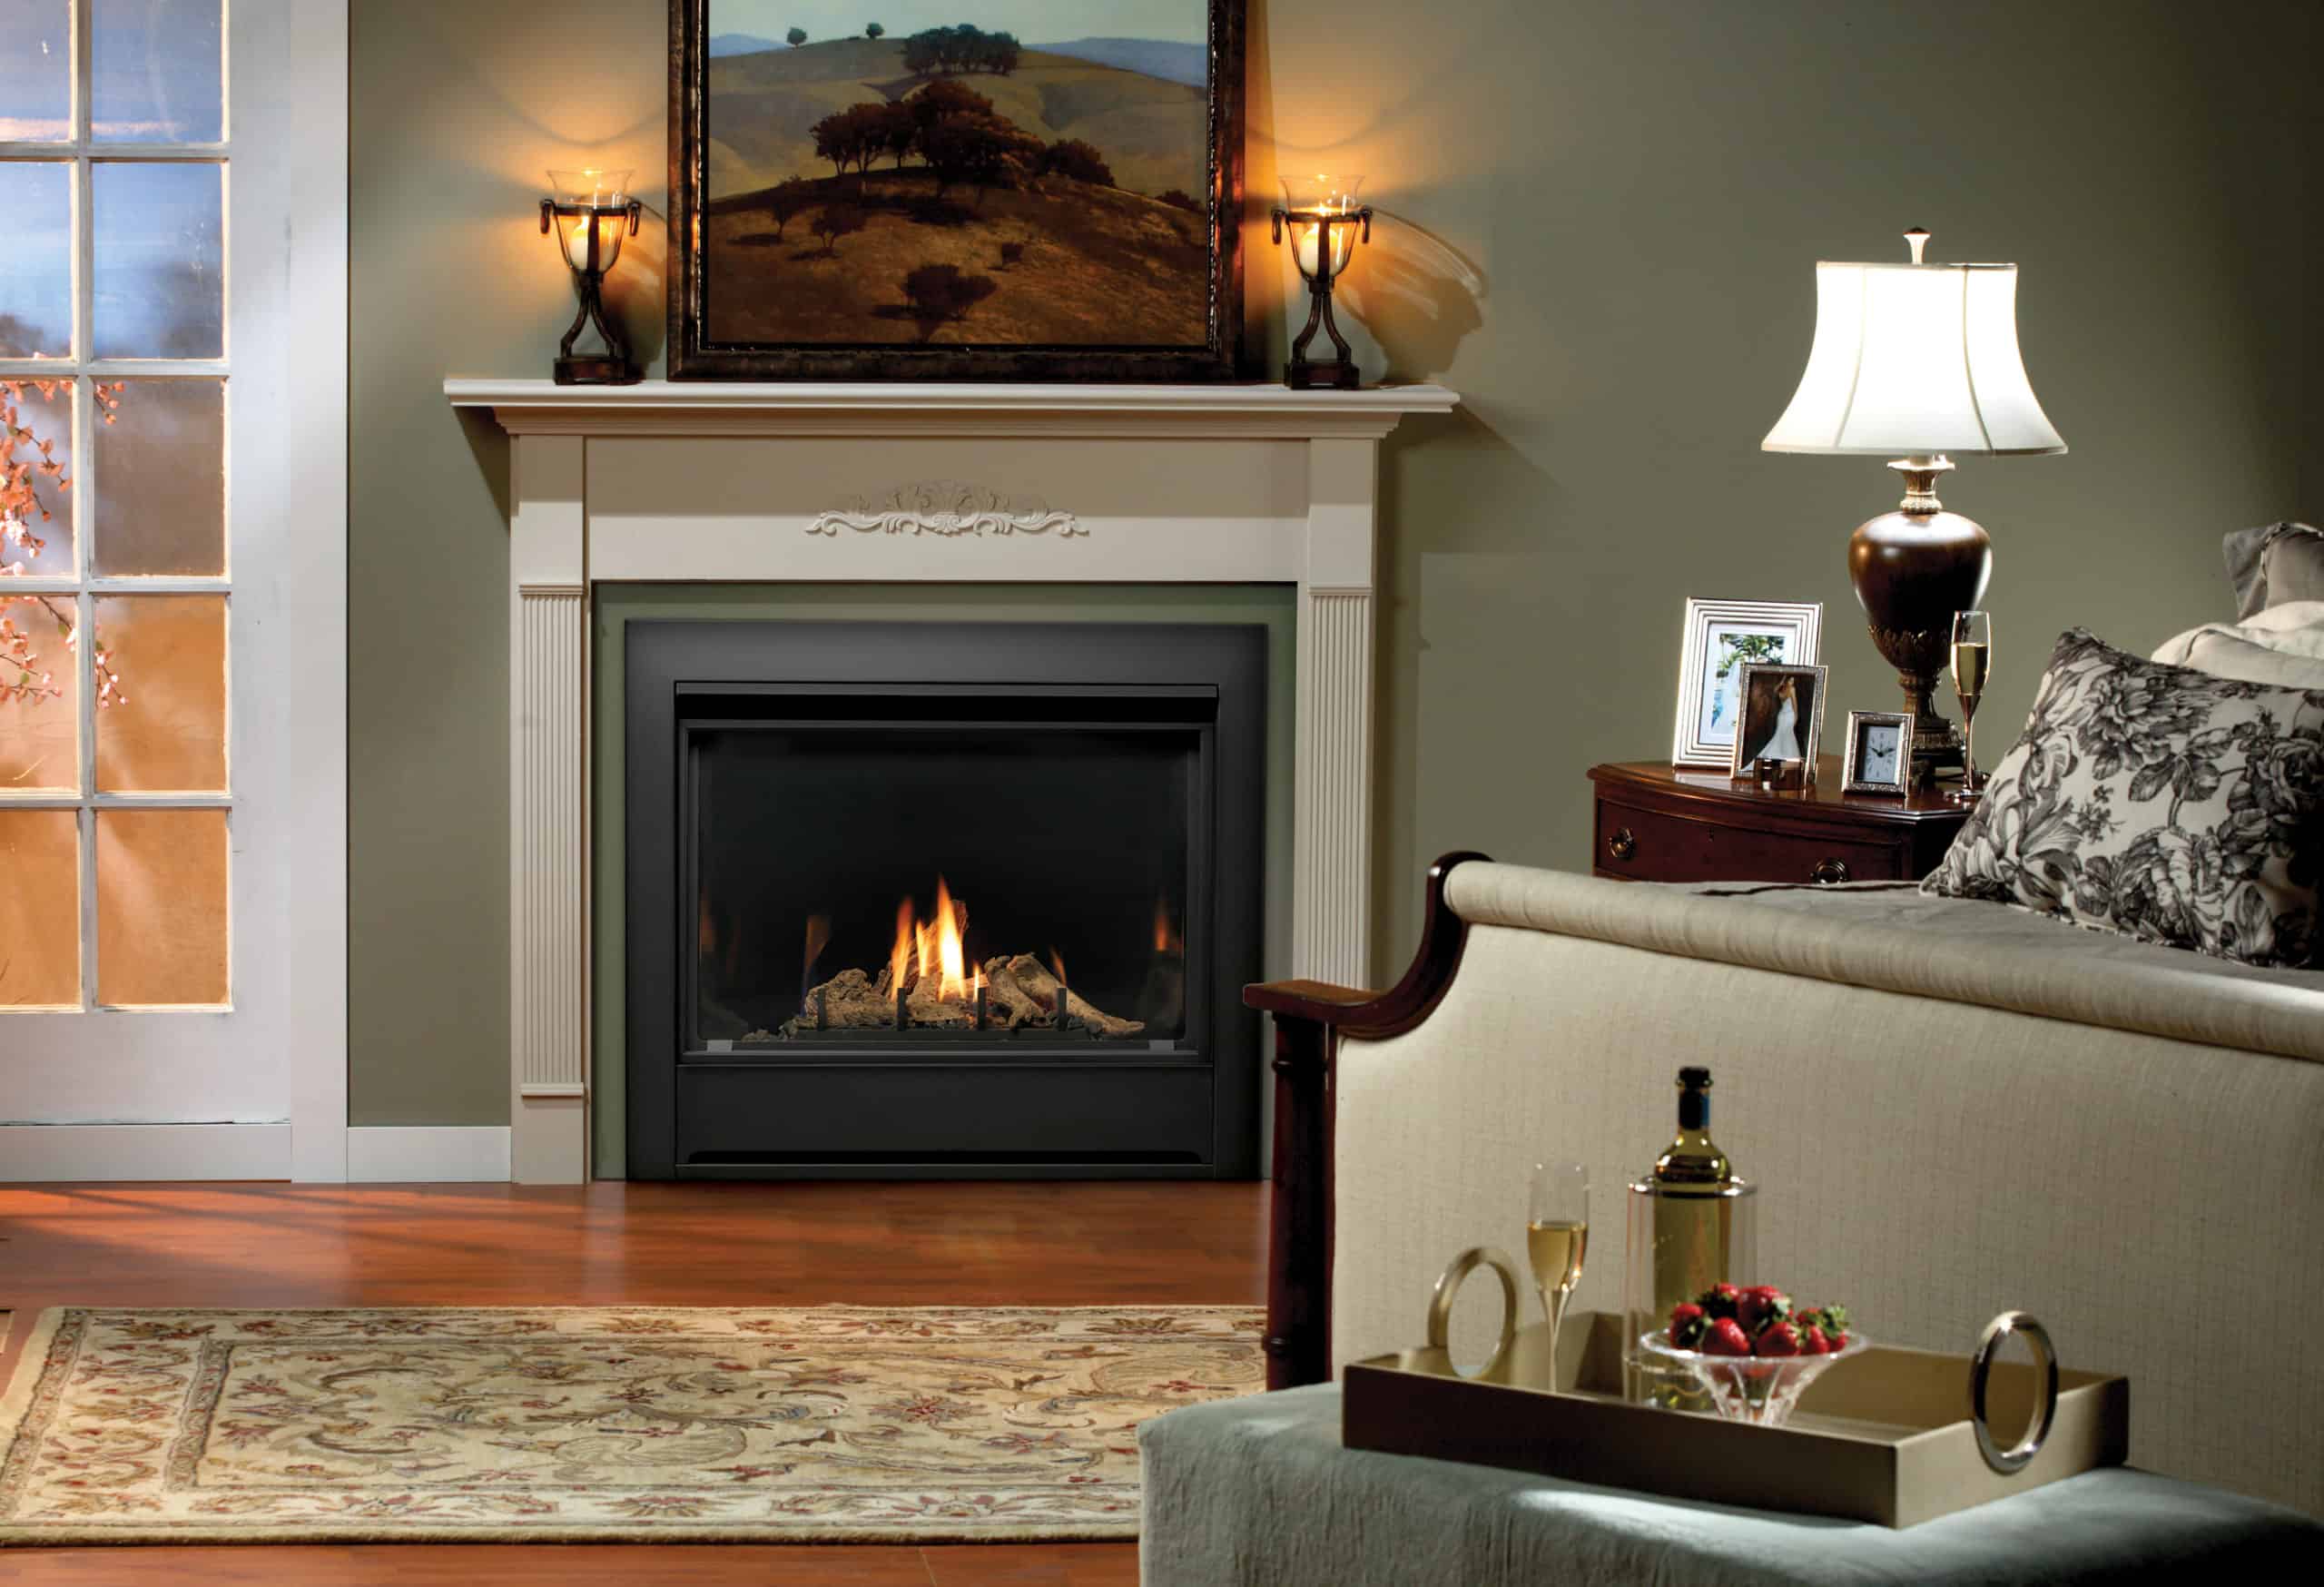 Solara driftwood2 scaled image on safe home fireplace website